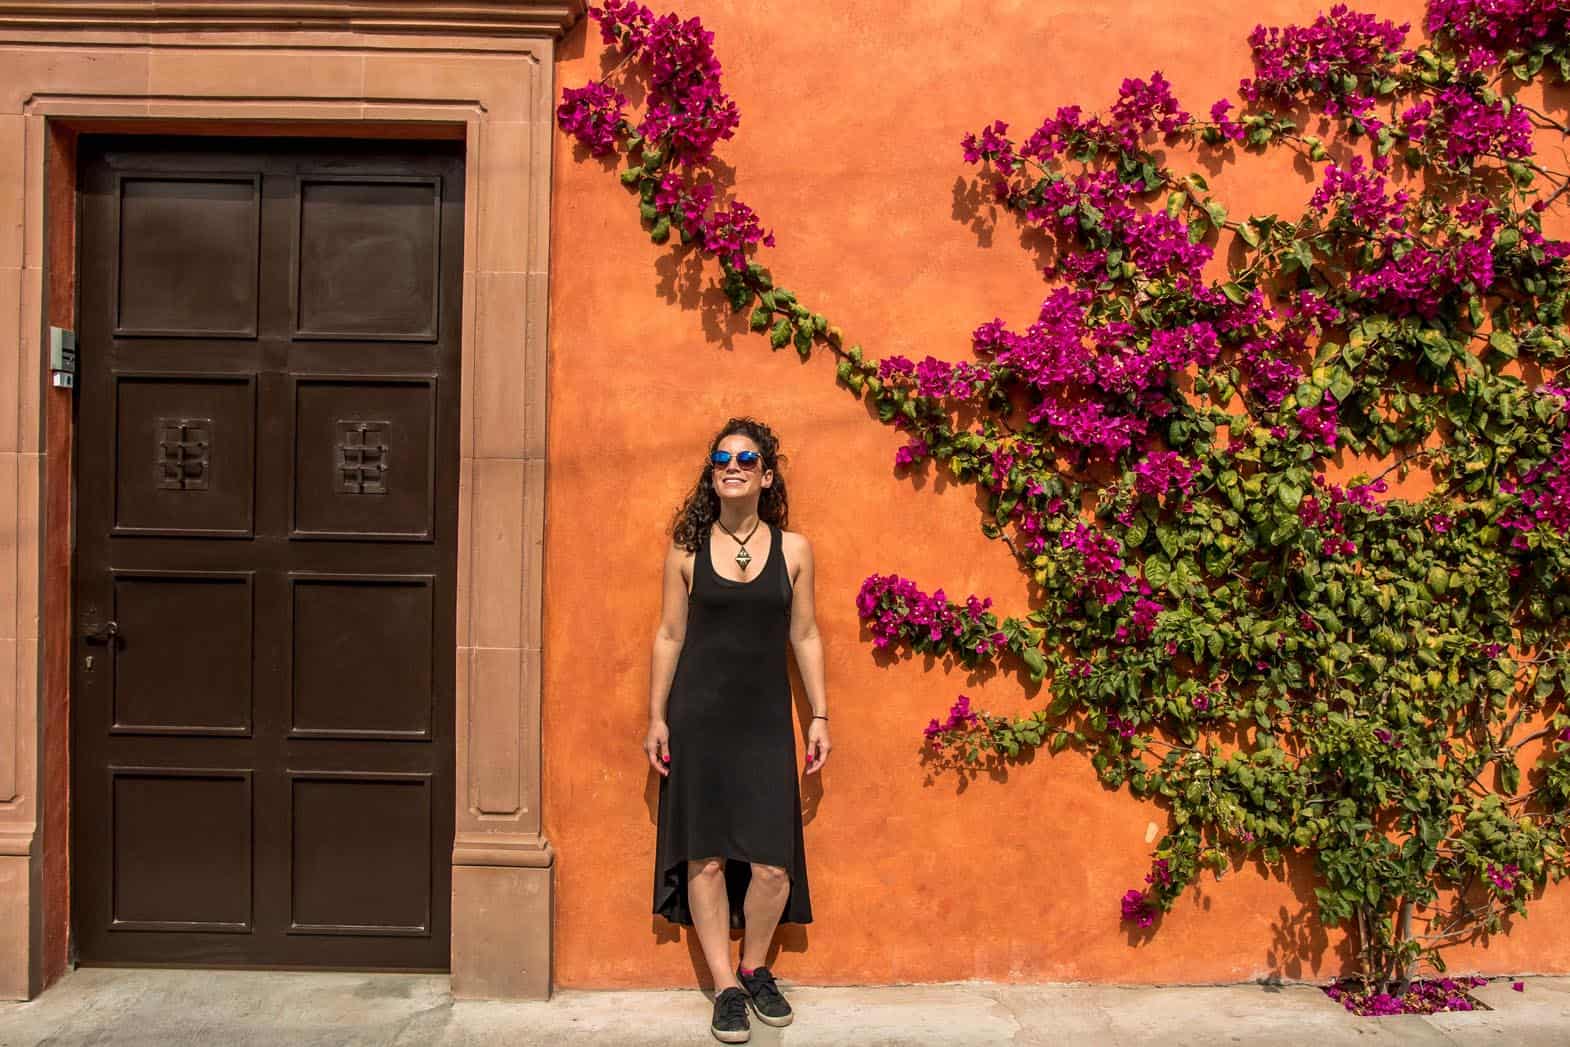 About Nina Ragusa - Travel Blogger and Nomadic Expat